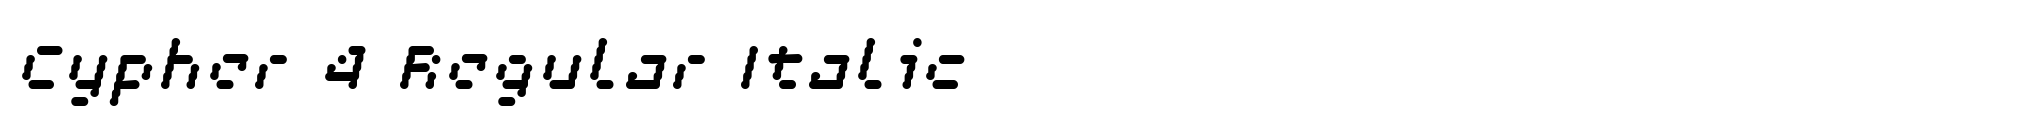 Cypher 4 Regular Italic image